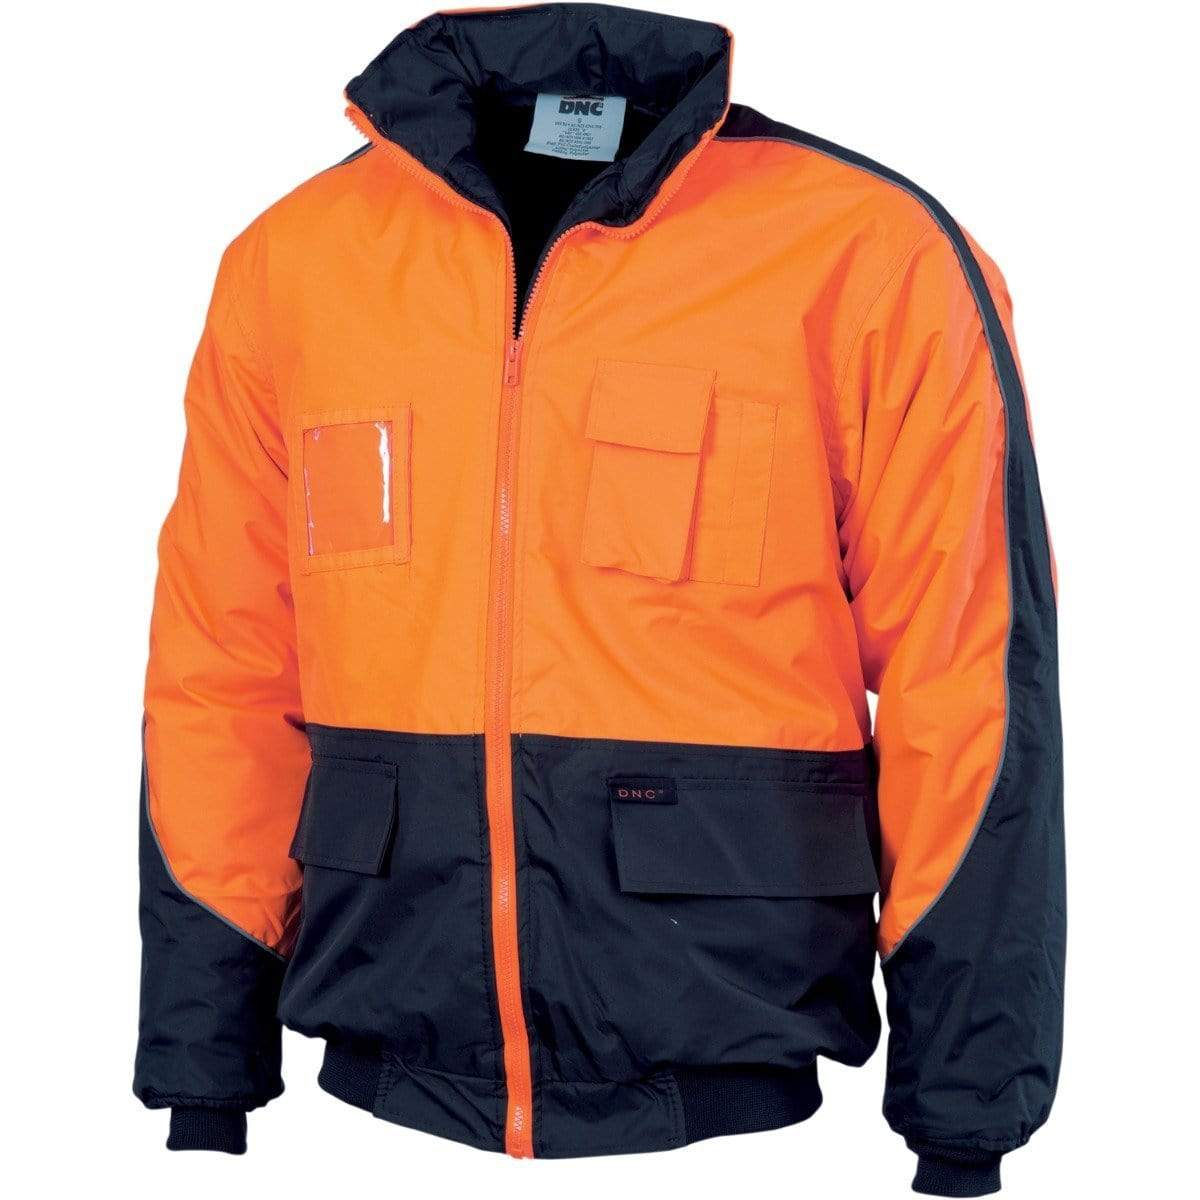 Dnc Workwear Hi-vis Contrast Bomber Jacket - 3991 Work Wear DNC Workwear Orange/Navy XS 